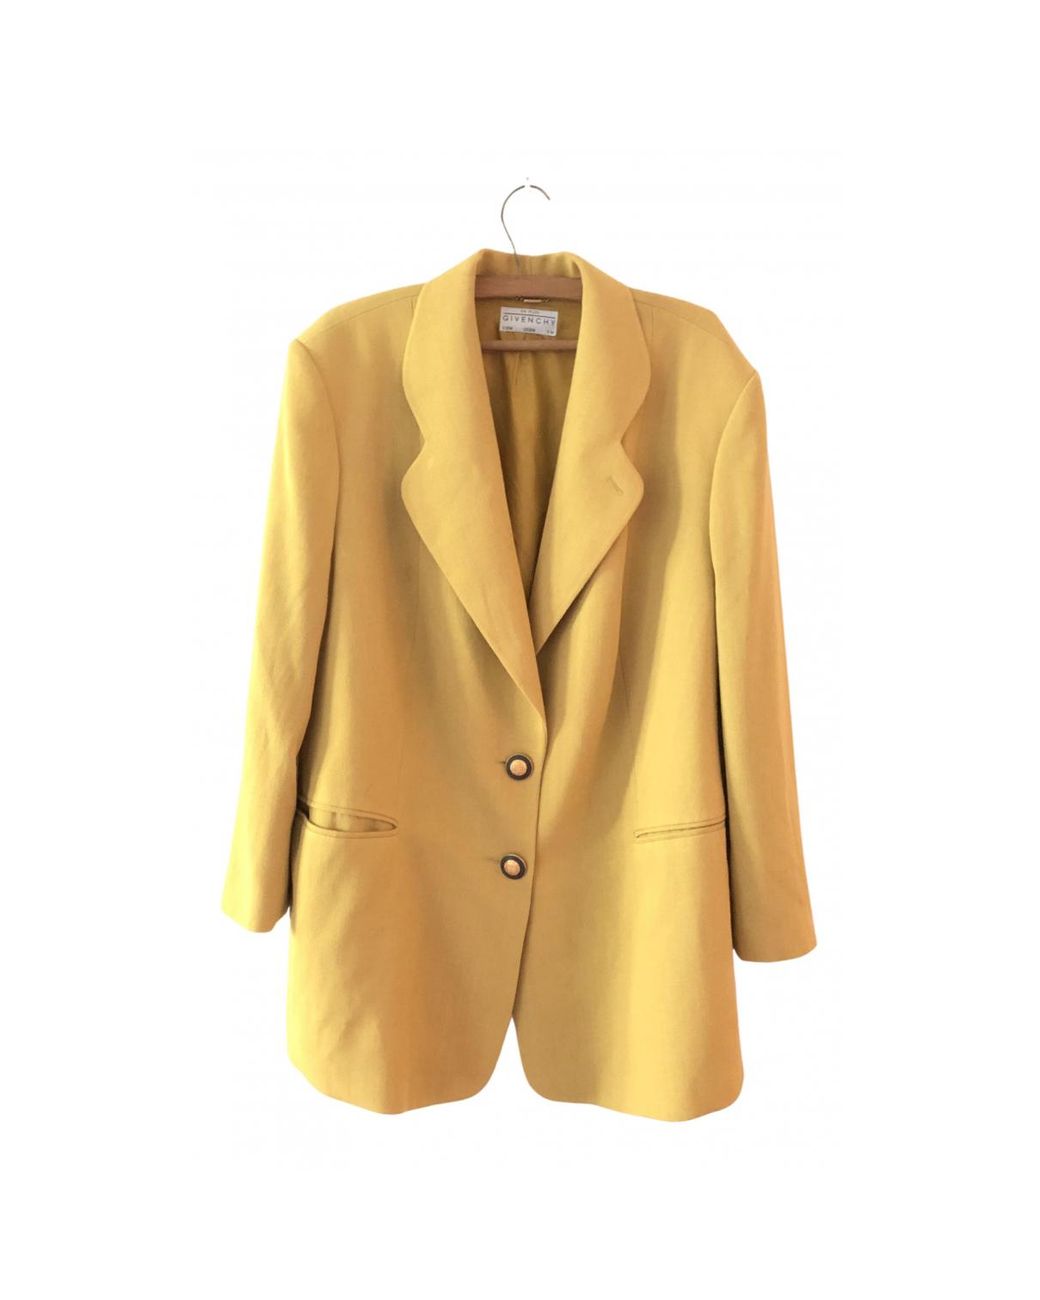 Givenchy Wool Blazer in Yellow - Lyst